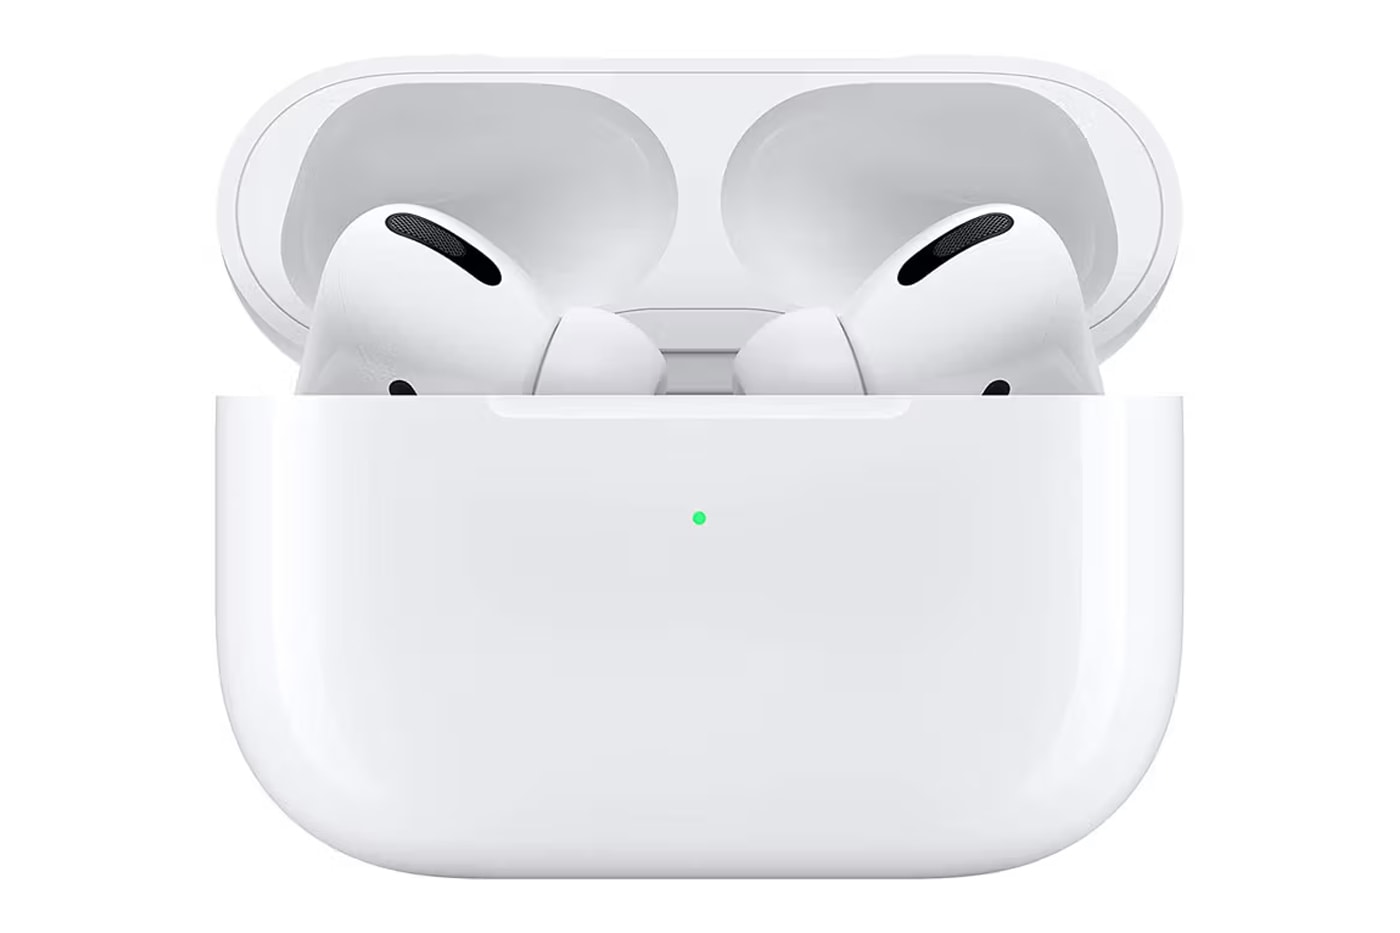 Apple AirPods USB-C Charging Case Rumors